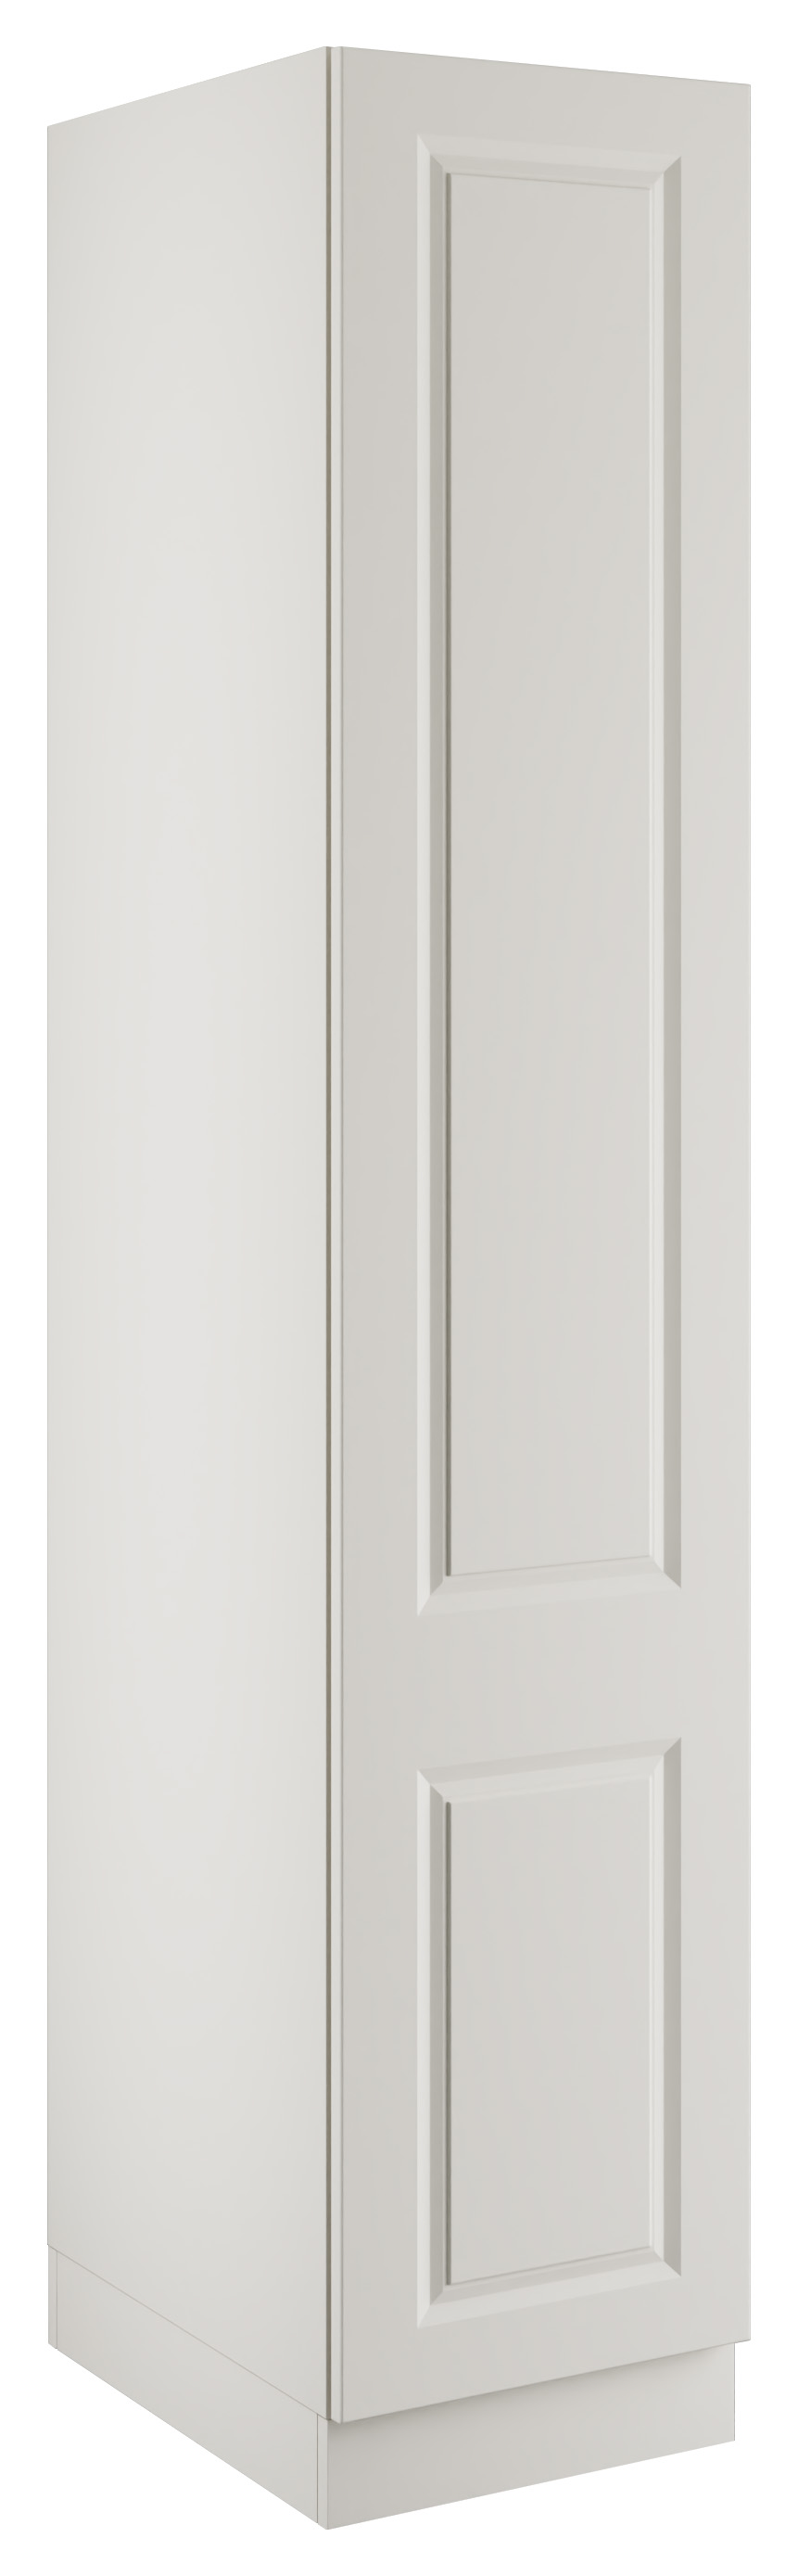 Harrogate White Single Wardrobe with Single Rail - 450 x 2260 x 608mm